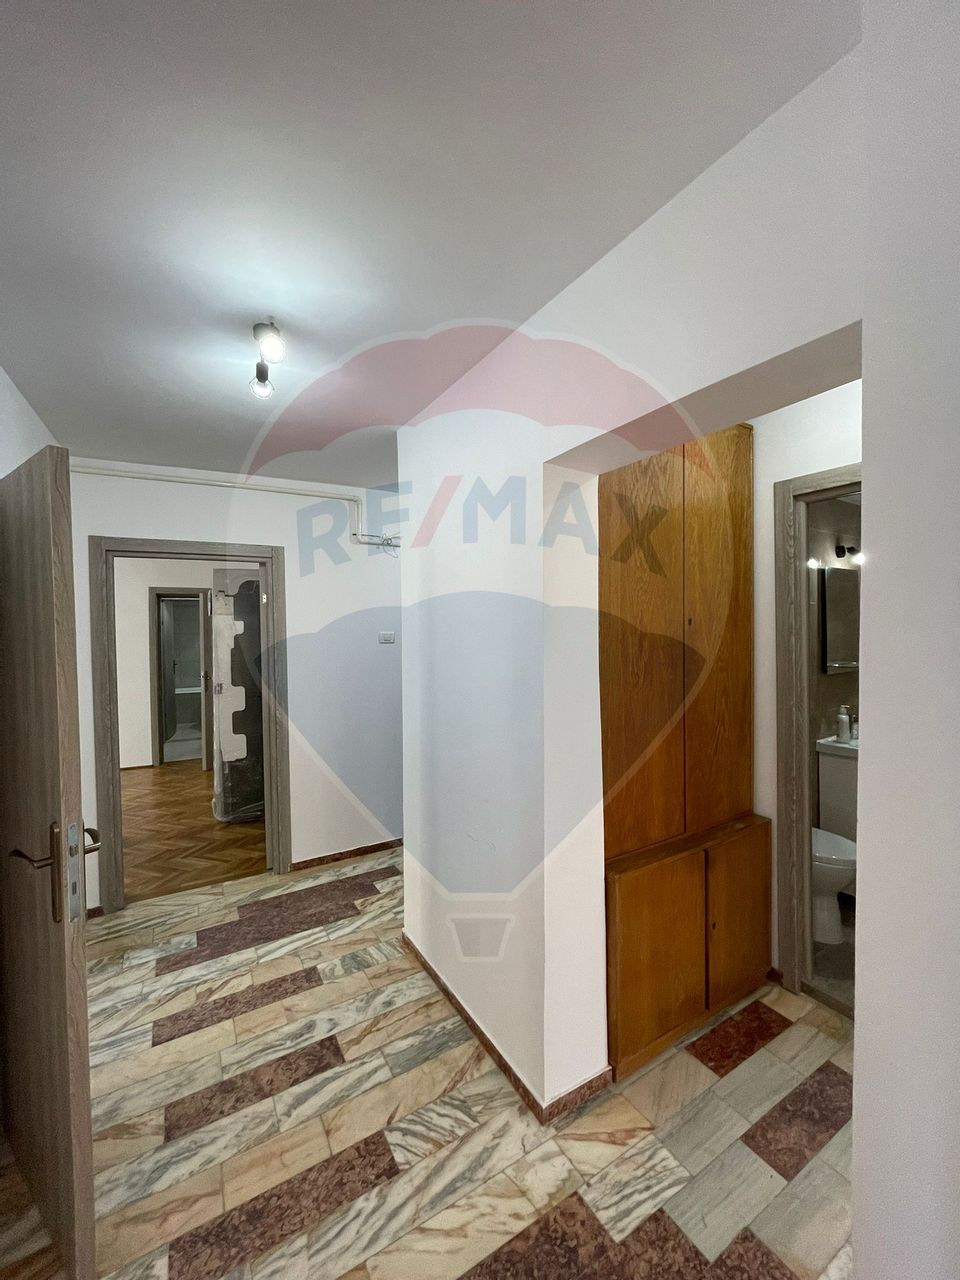 4 room Apartment for rent, Calea Victoriei area